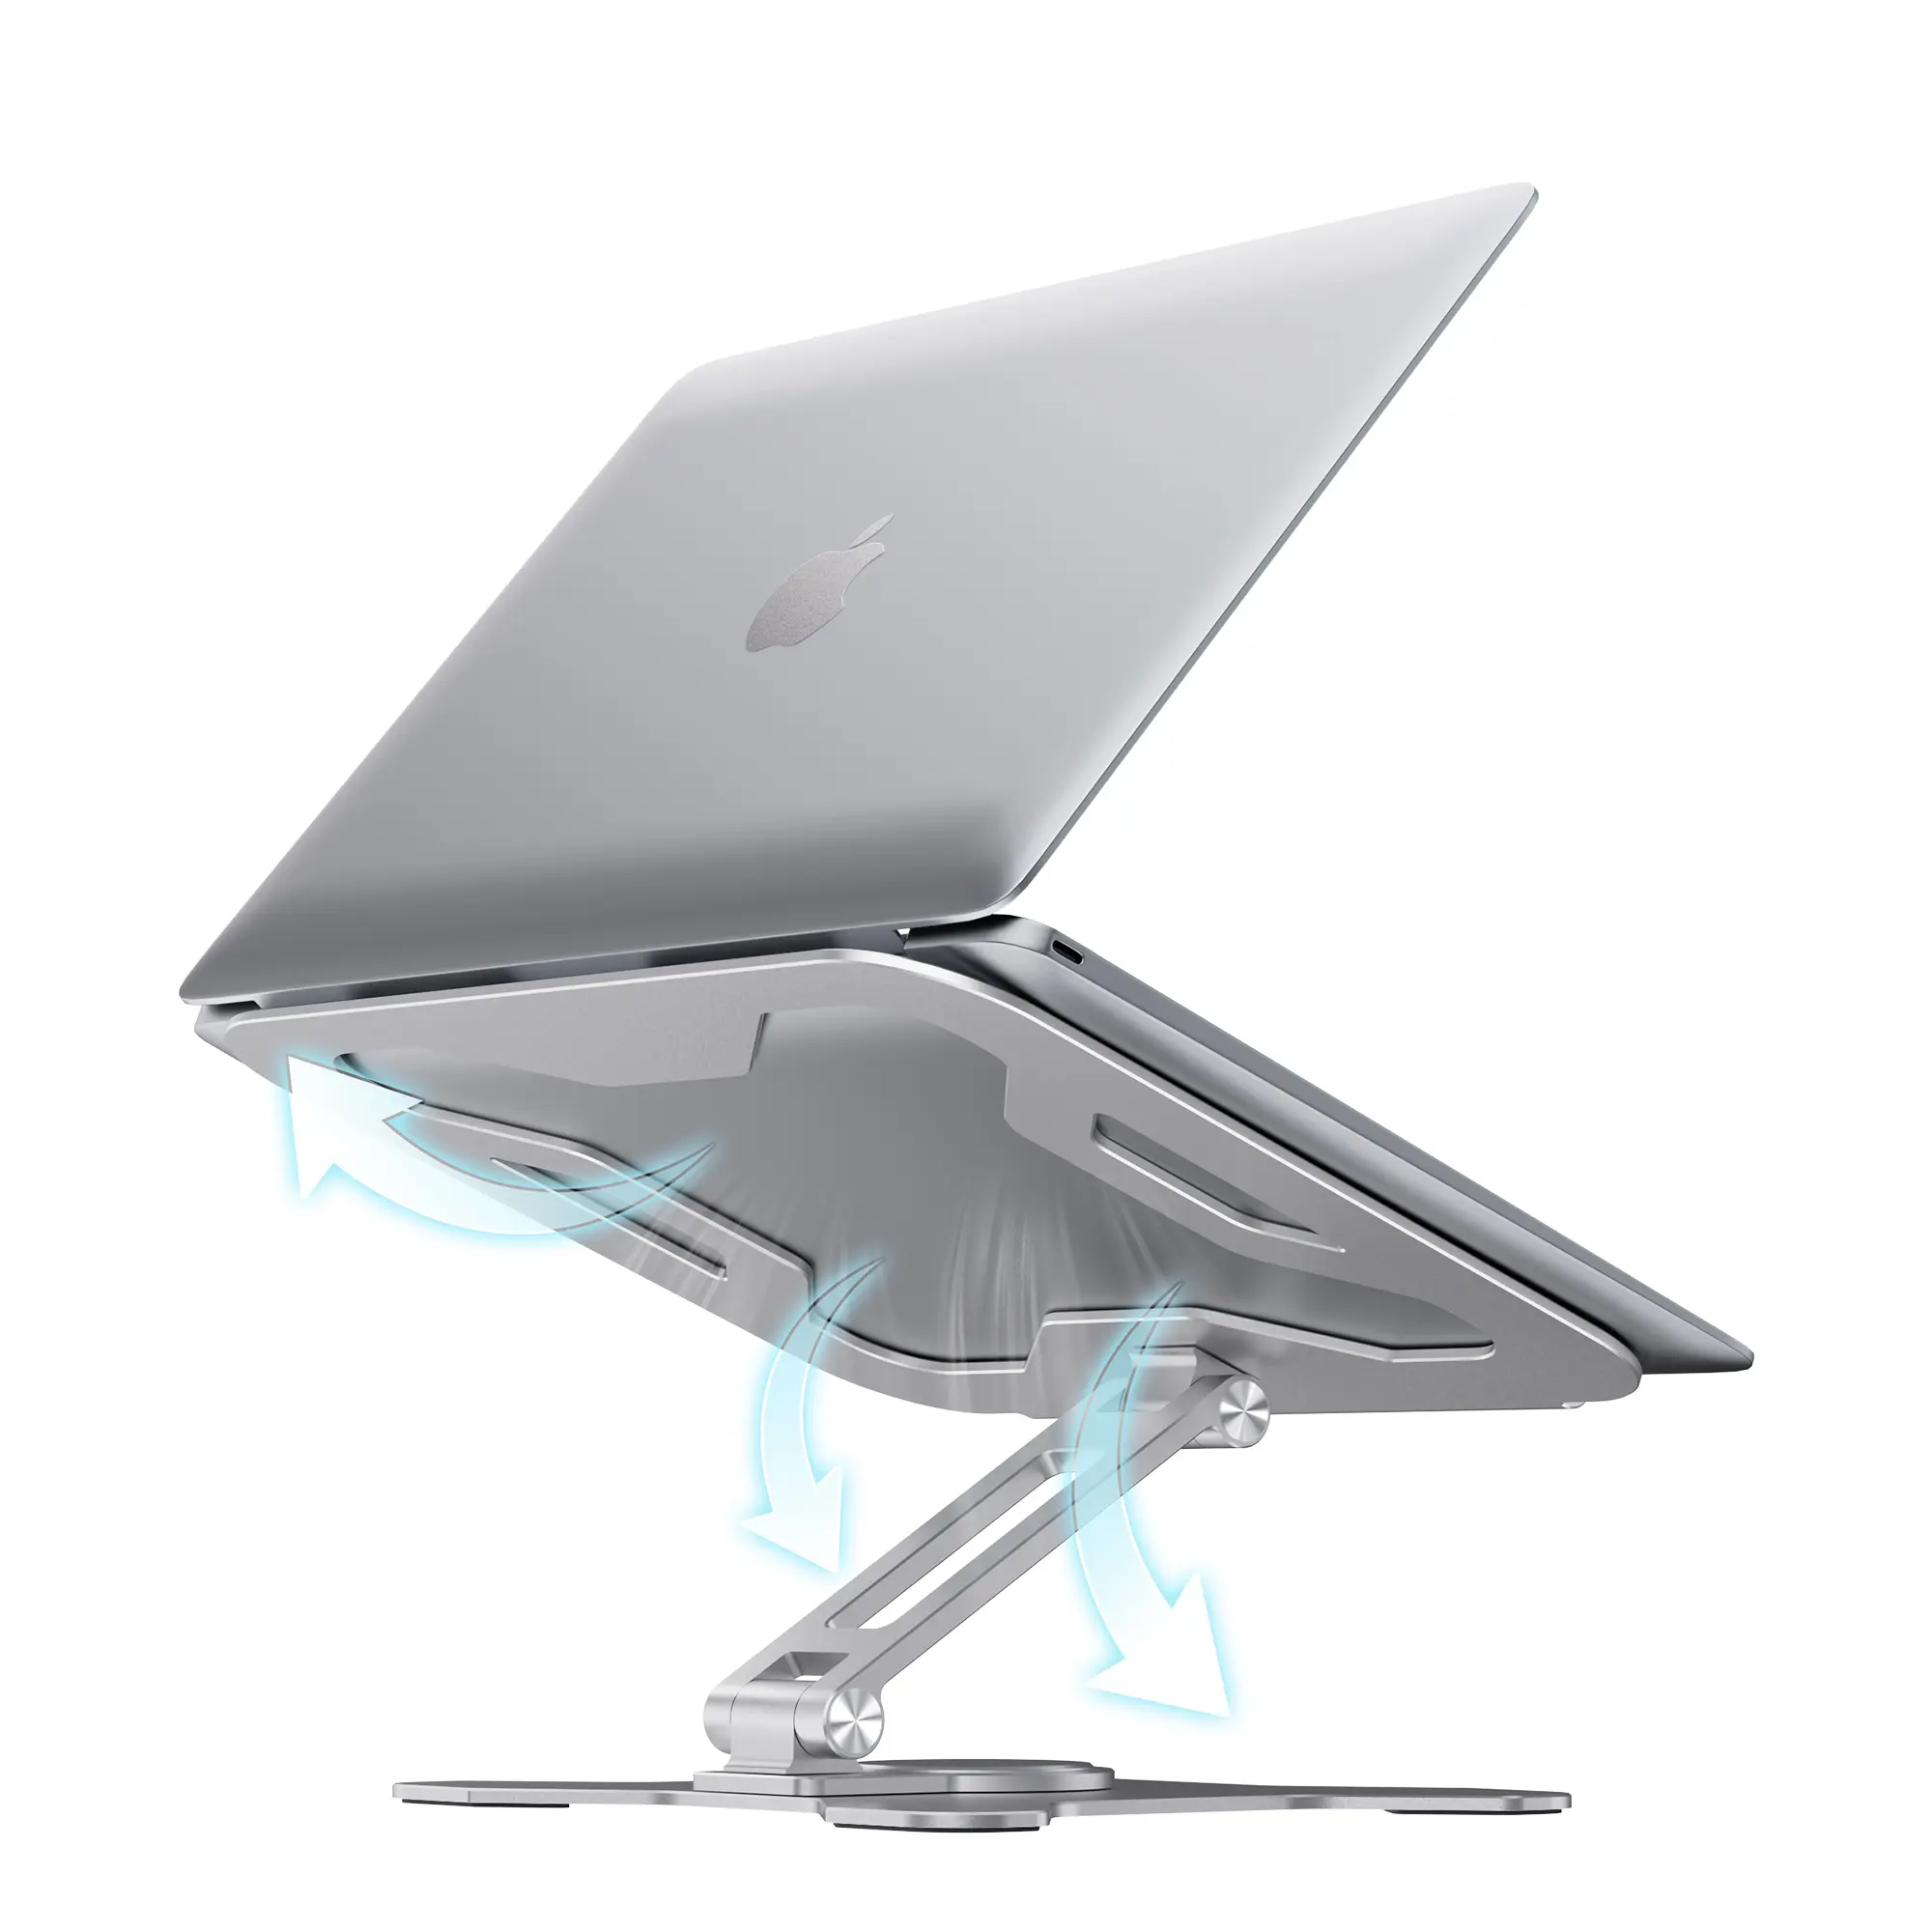 Boneruy 노트북 라이저 홀더 높이 조절 회전 회전 인체 공학적 접이식 노트북 스탠드 책상 알루미늄 Pl 6 개월 652g